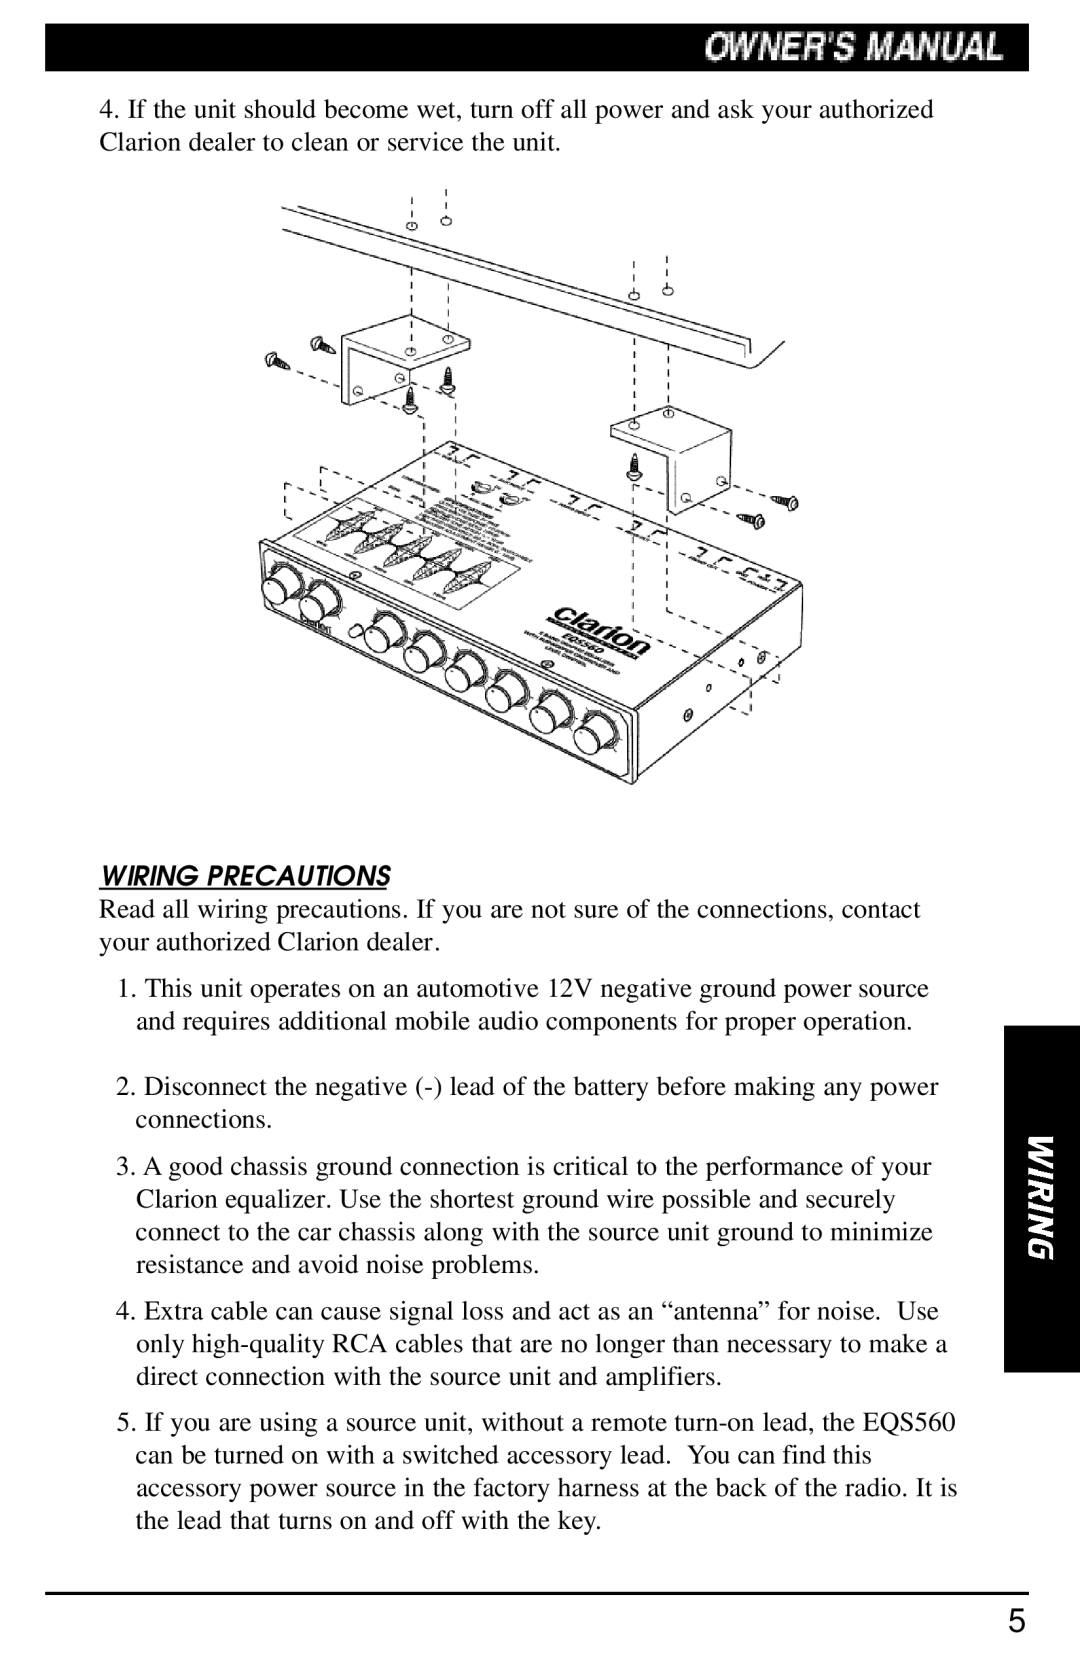 Clarion EQS560 manual Wiring Precautions 